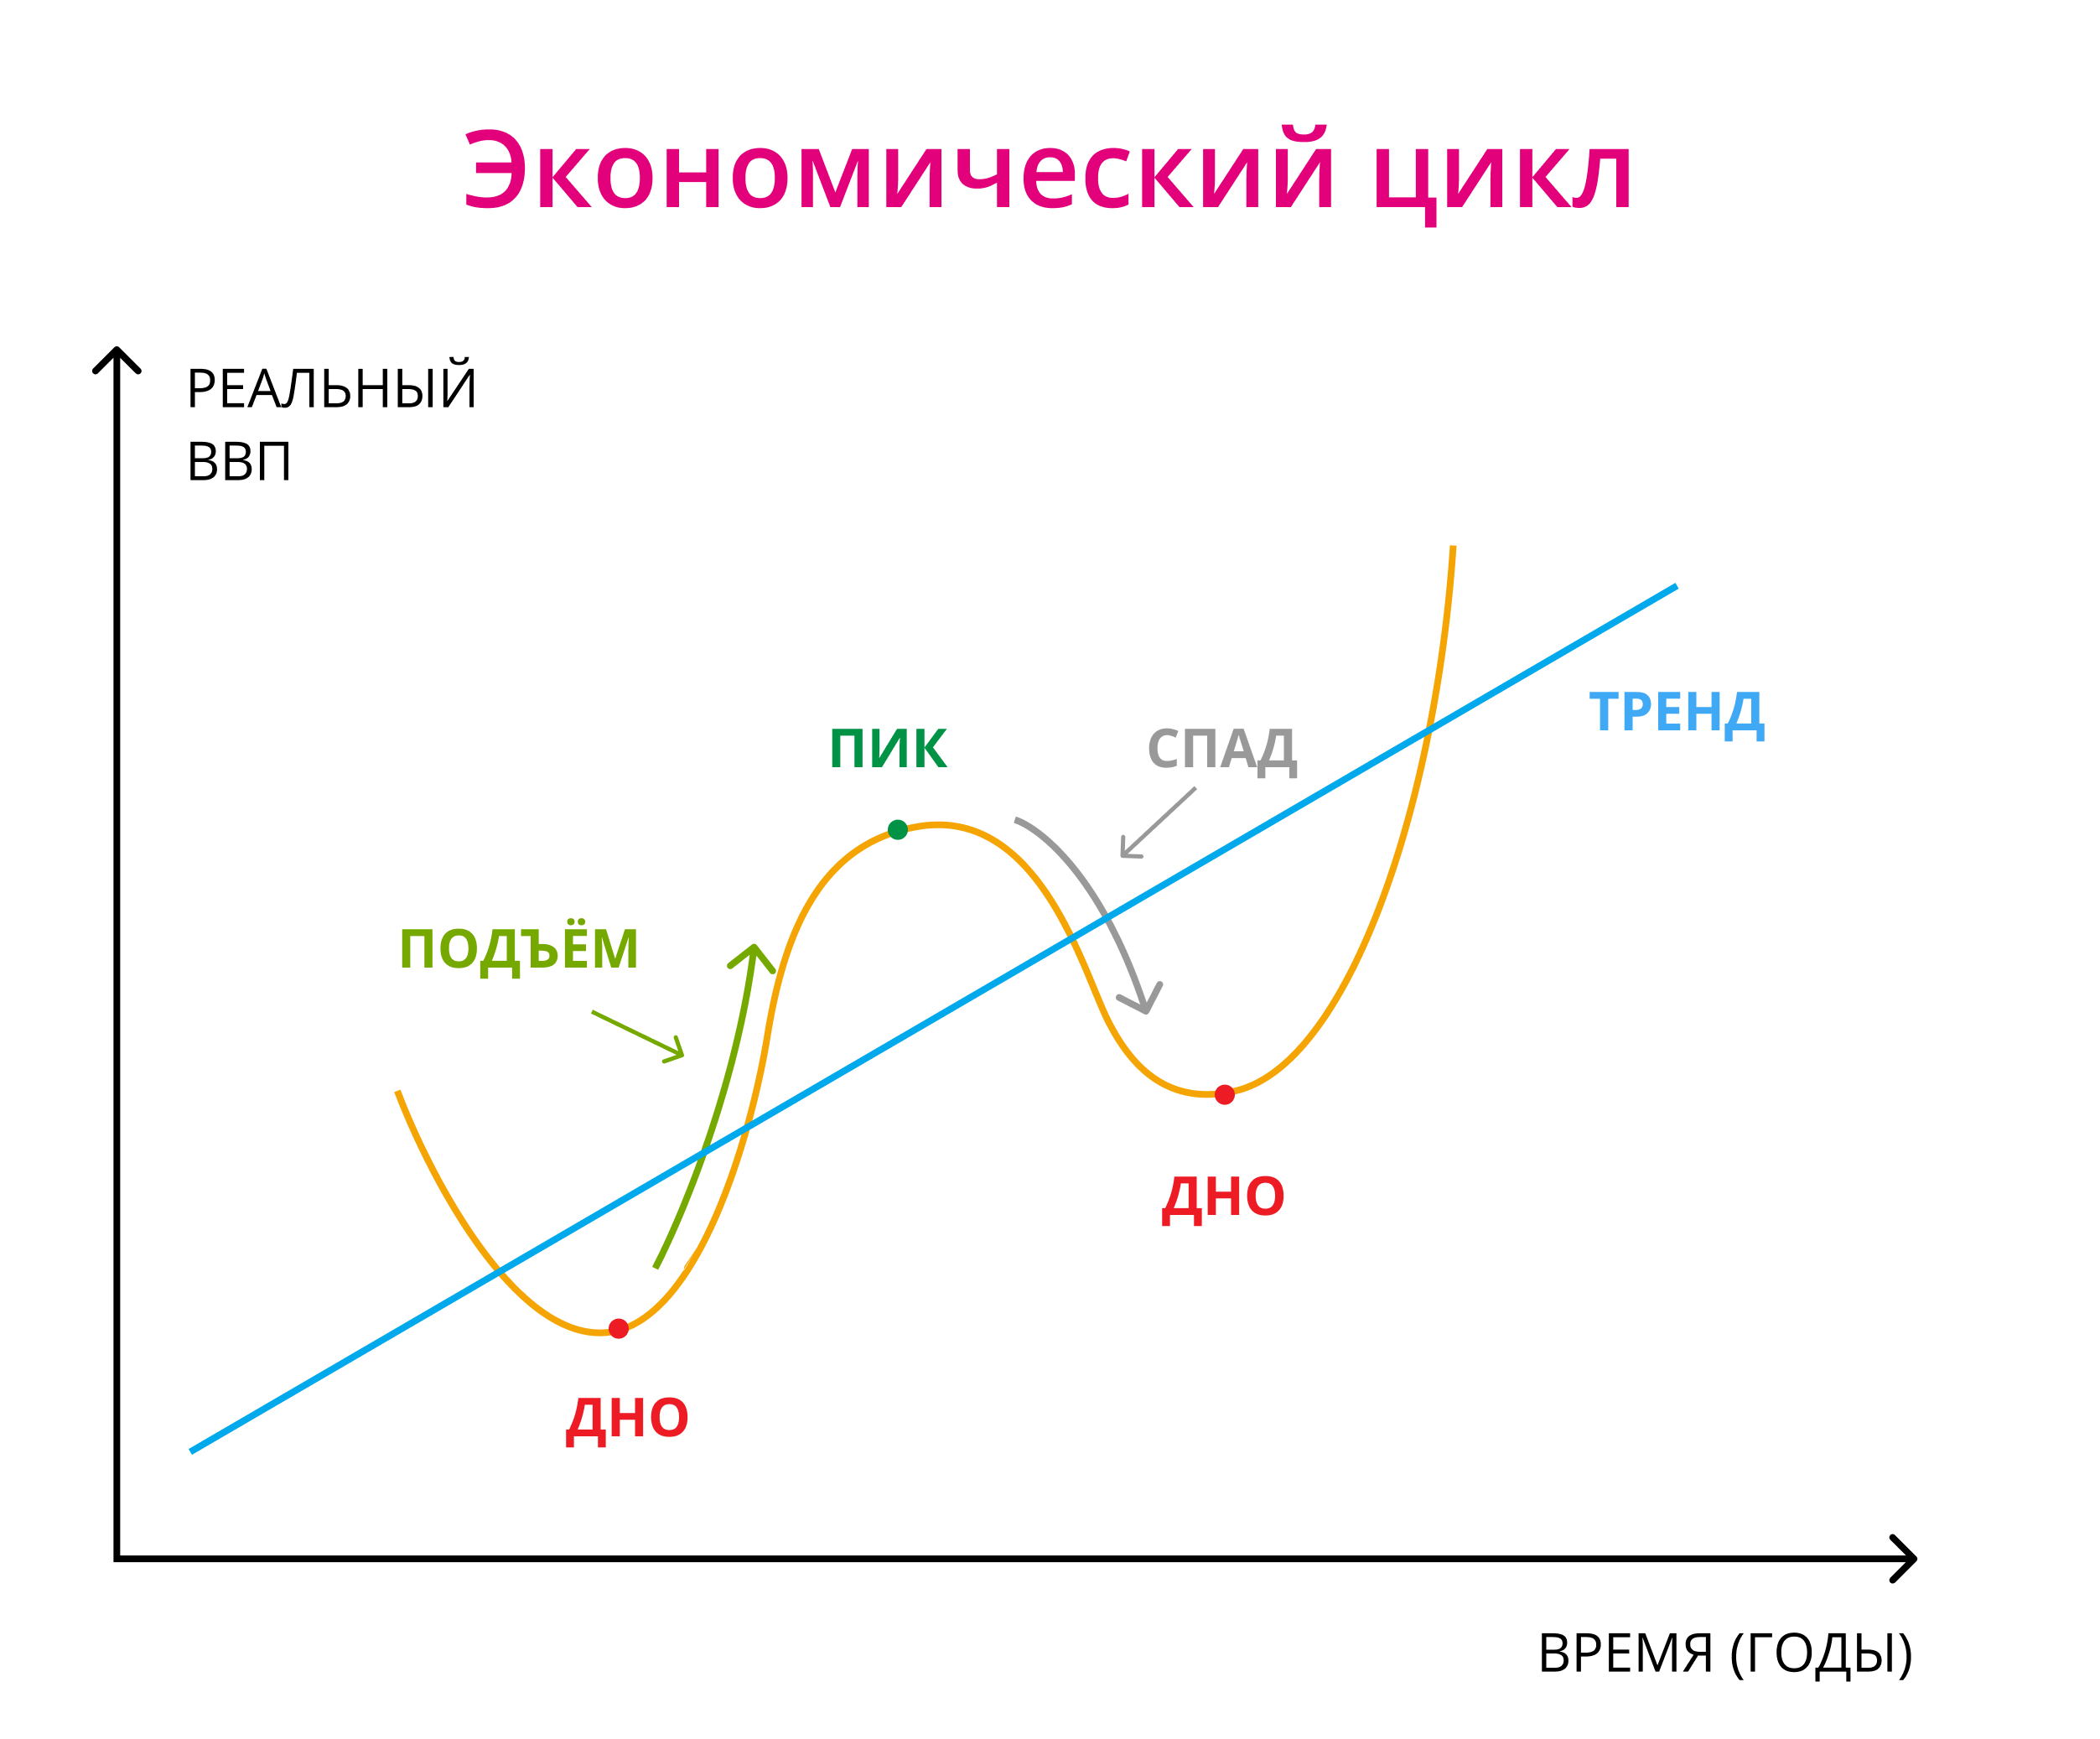 Характеристика экономического спада. Фазы экономического цикла схема. Экономический цикл фазы экономического цикла. Фазы экономического цикла график. Показатели экономических циклов (фаза подъема и спада).